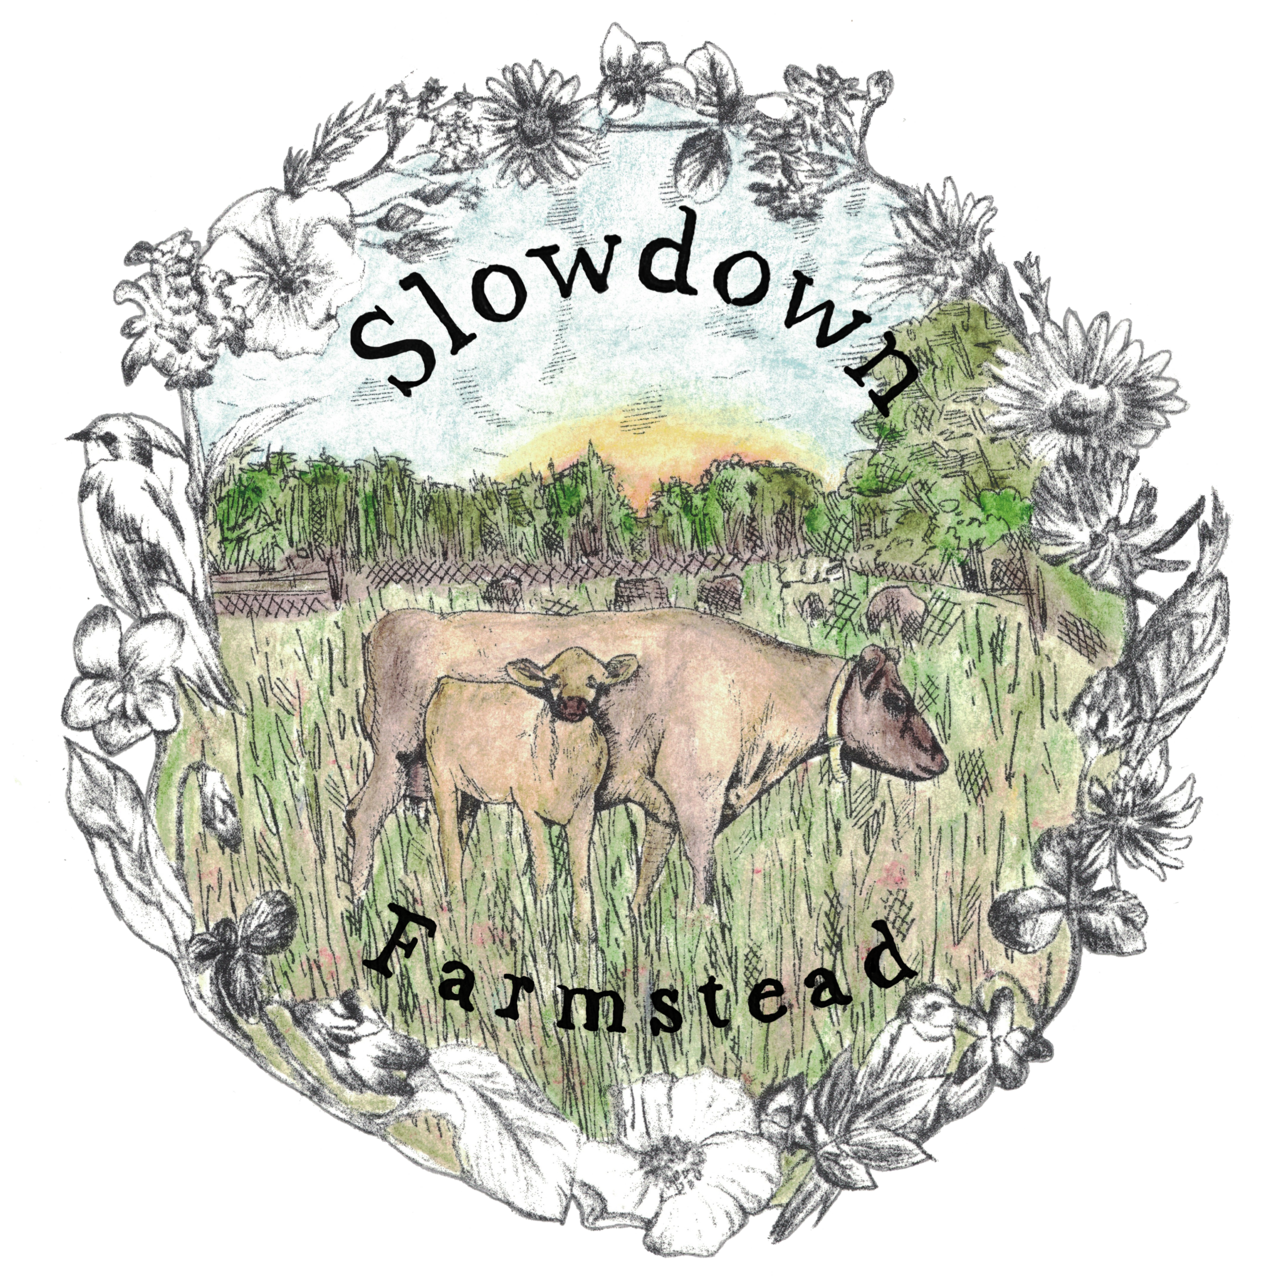 Artwork for Slowdown Farmstead